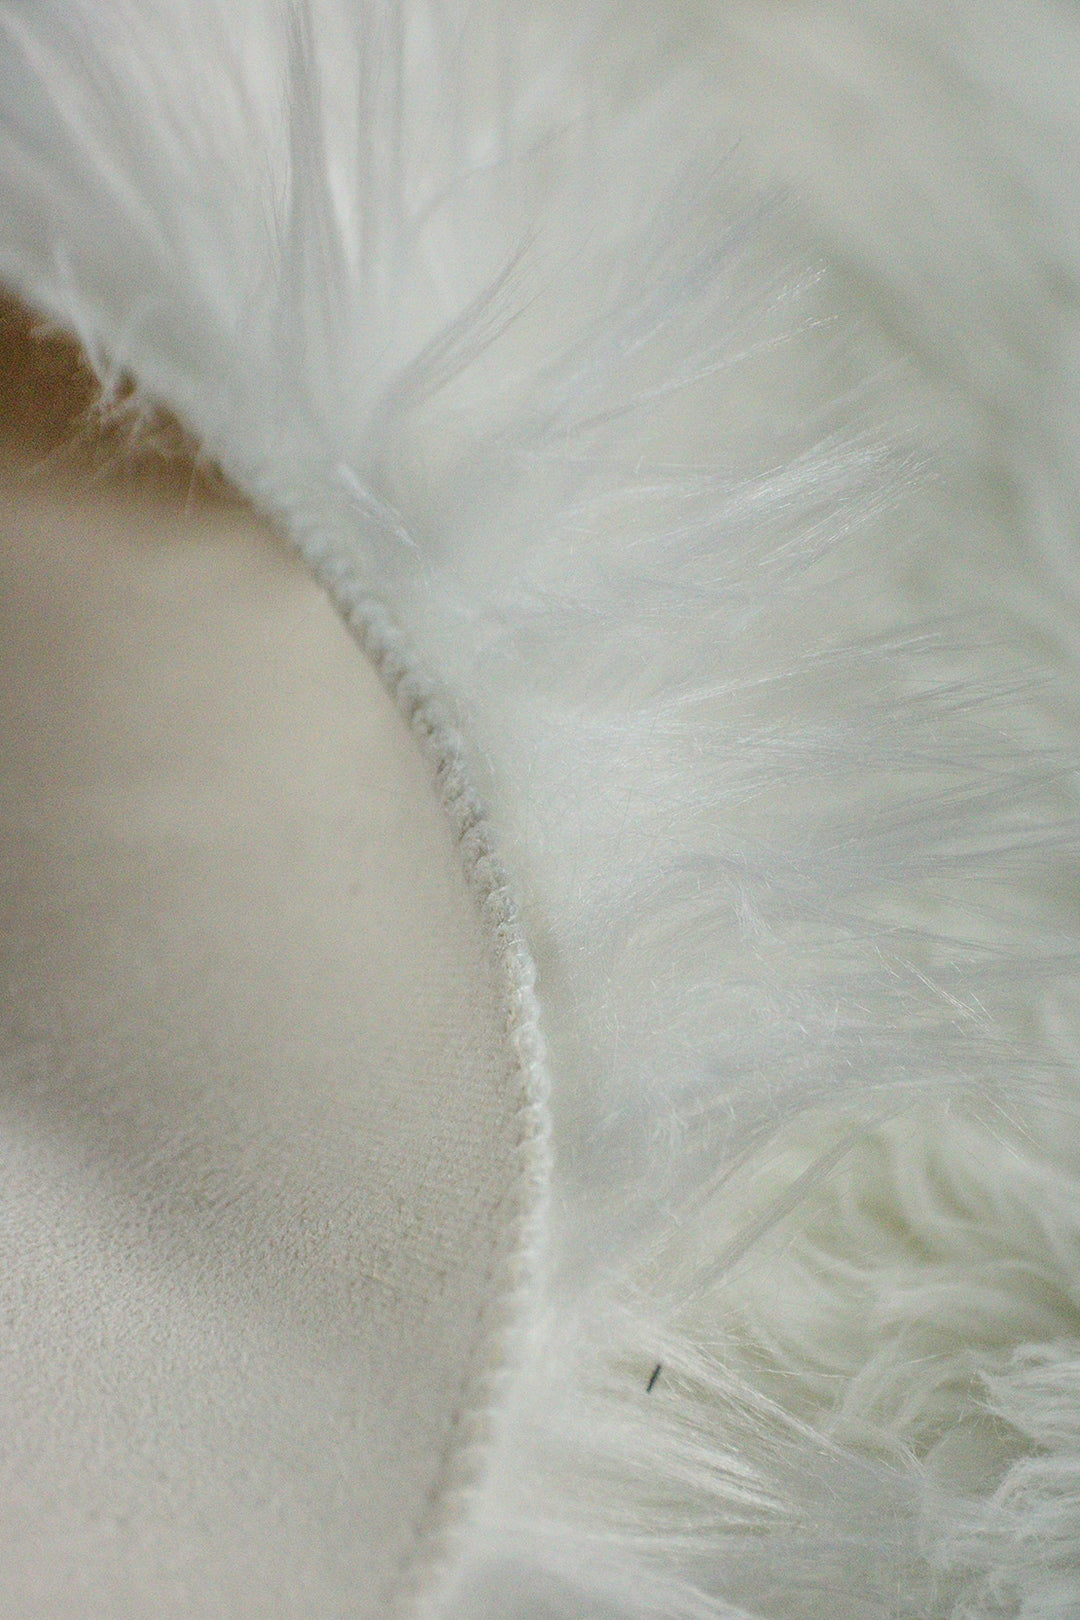 Wild Life (Sheep Fur) - 3.2 x 4.9 FT - White - Luxuriously Soft Fluffy Rug